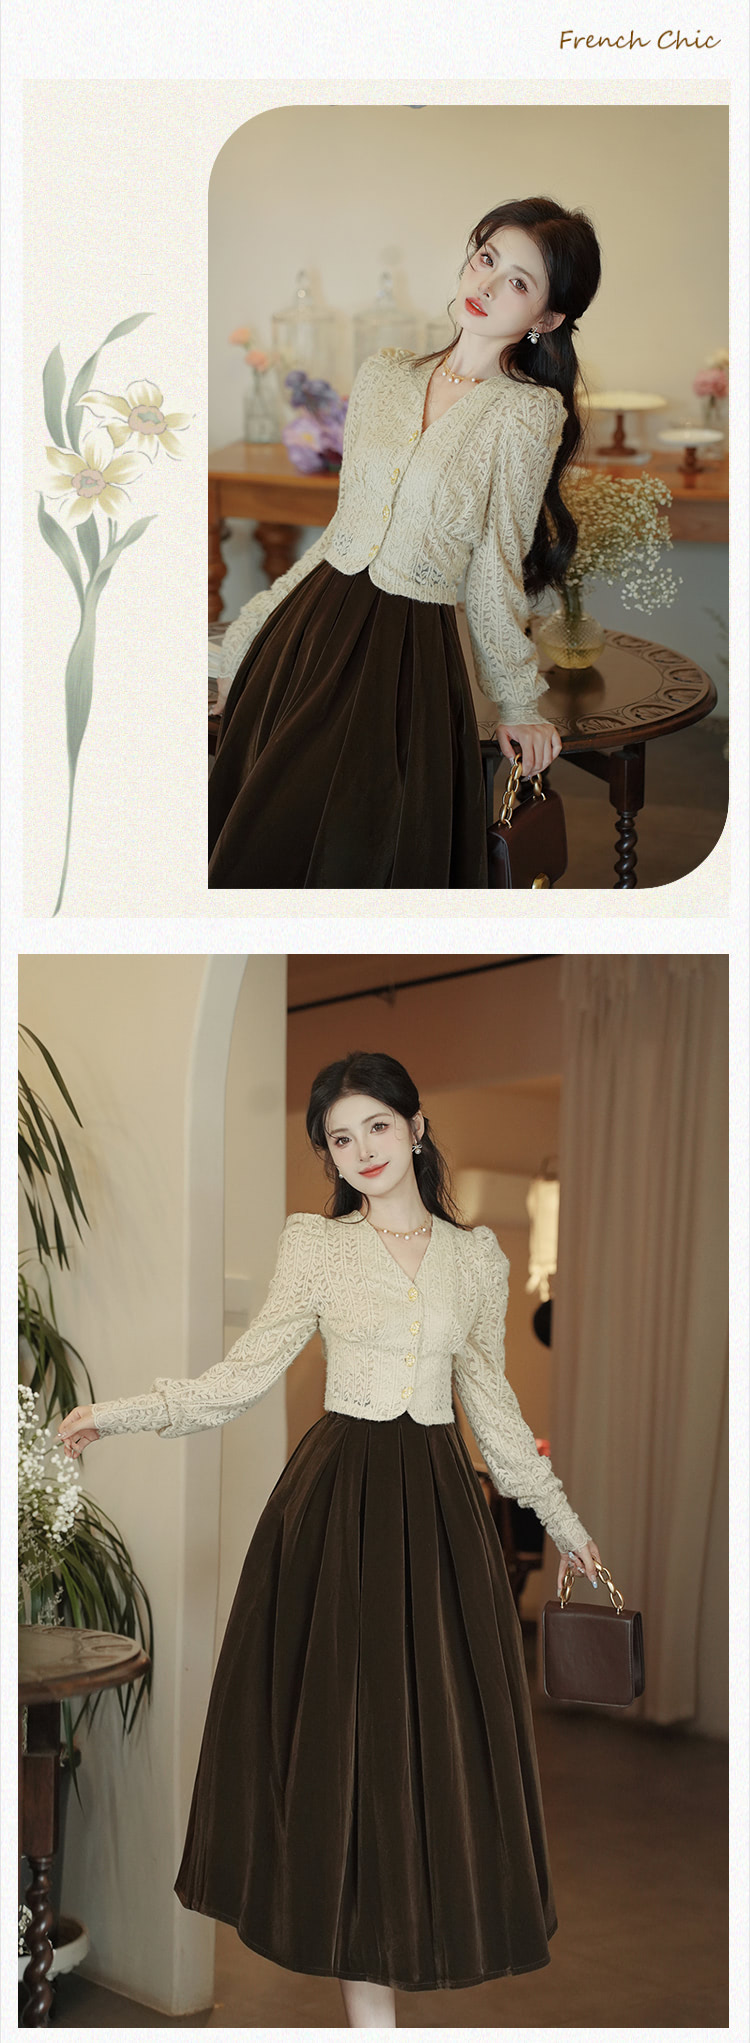 French-Vintage-Style-High-Waist-Velvet-Skirt-Slim-Skirt-Lace-Cardigan-Suit10